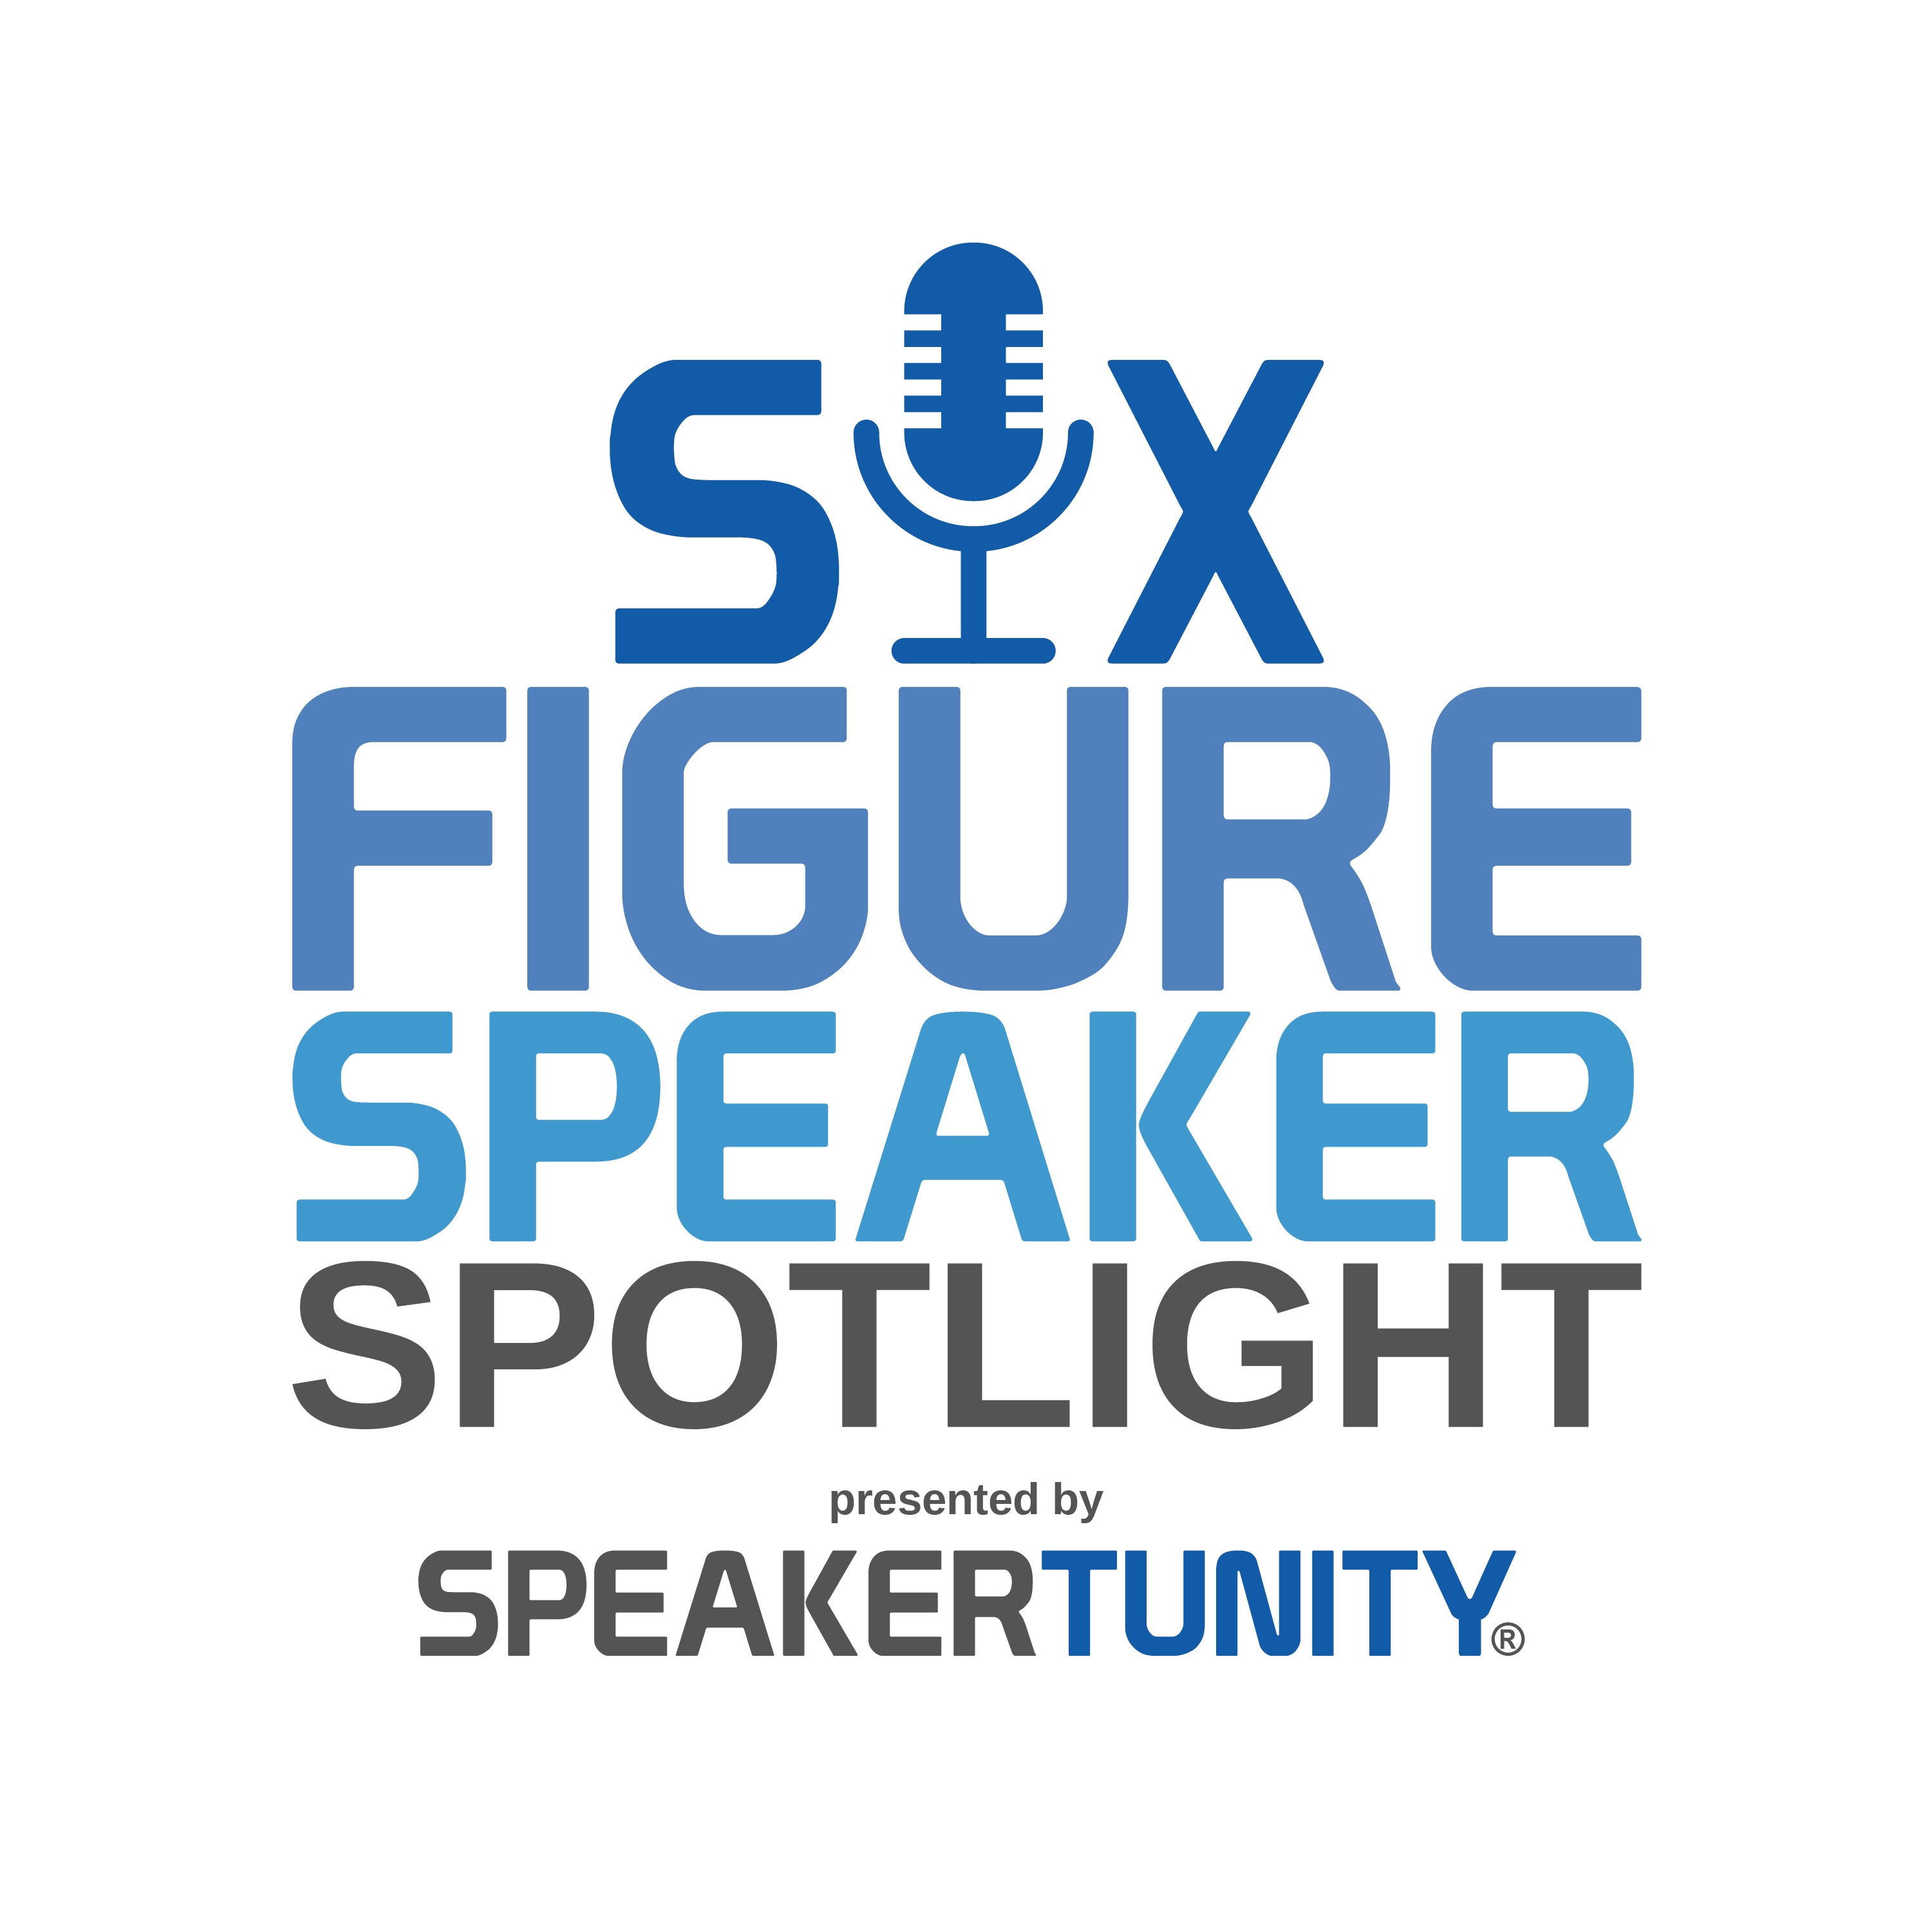 Six-Figure Speaker Spotlight Podcast